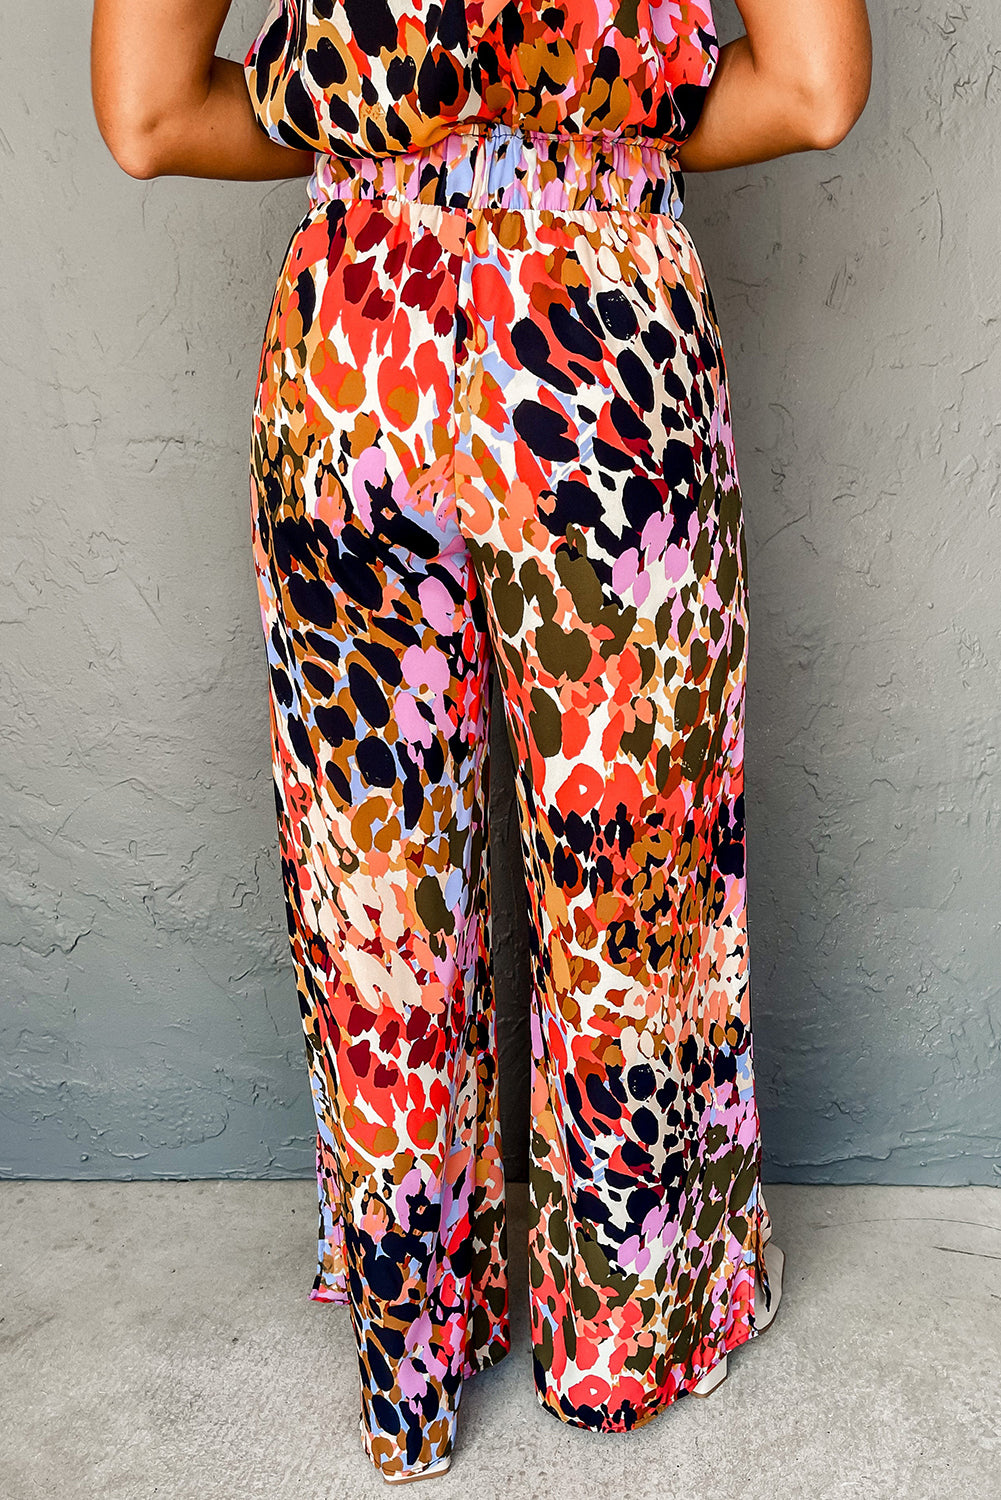 Multicolor Leopard Print Halter Top Jumpsuit